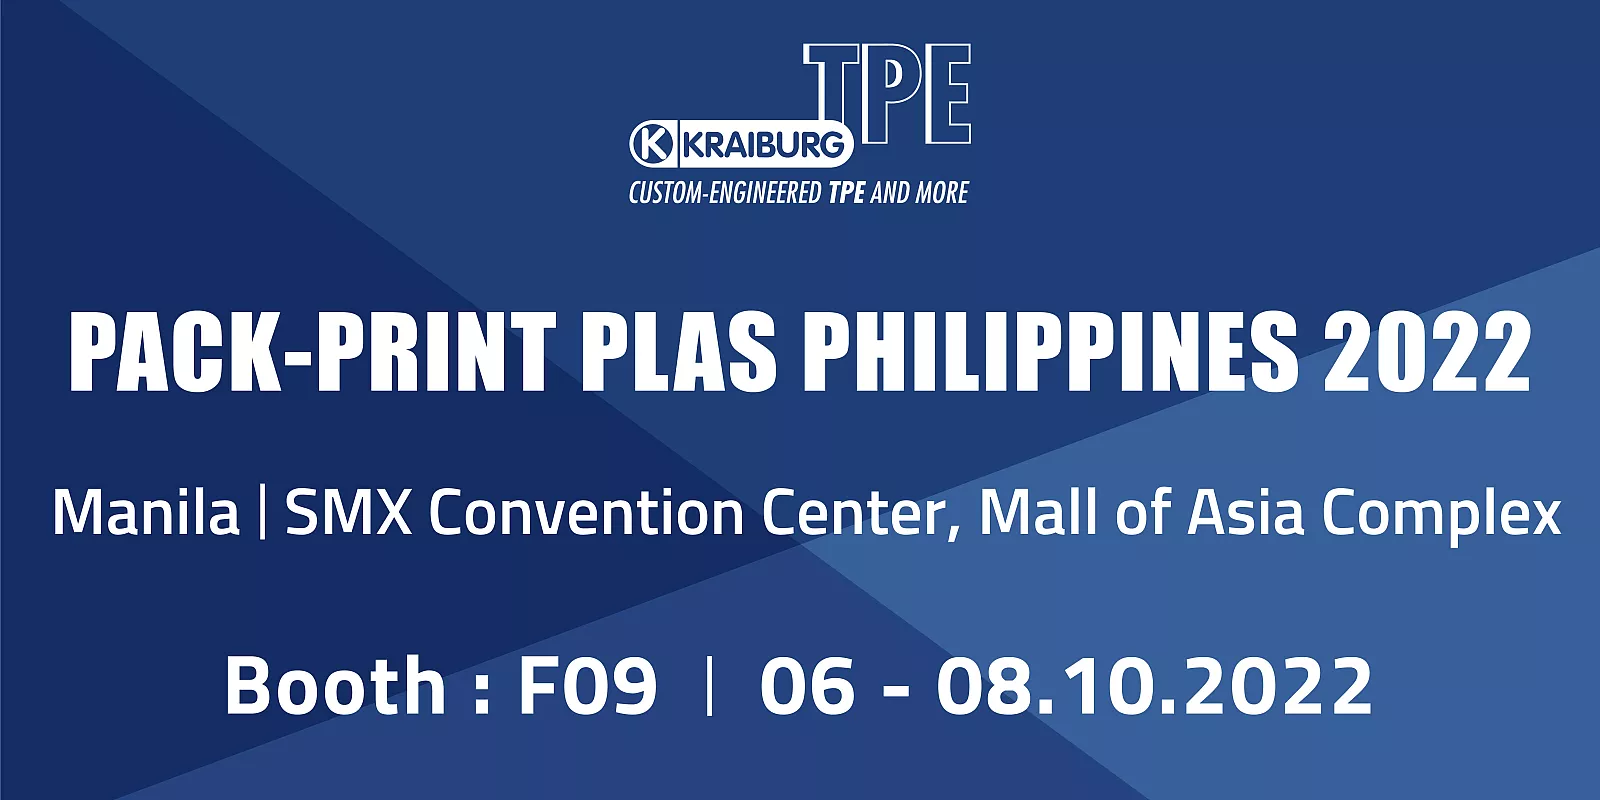 PACK-PRINT PLAS 필리핀 2022에서 KRAIBURG TPE